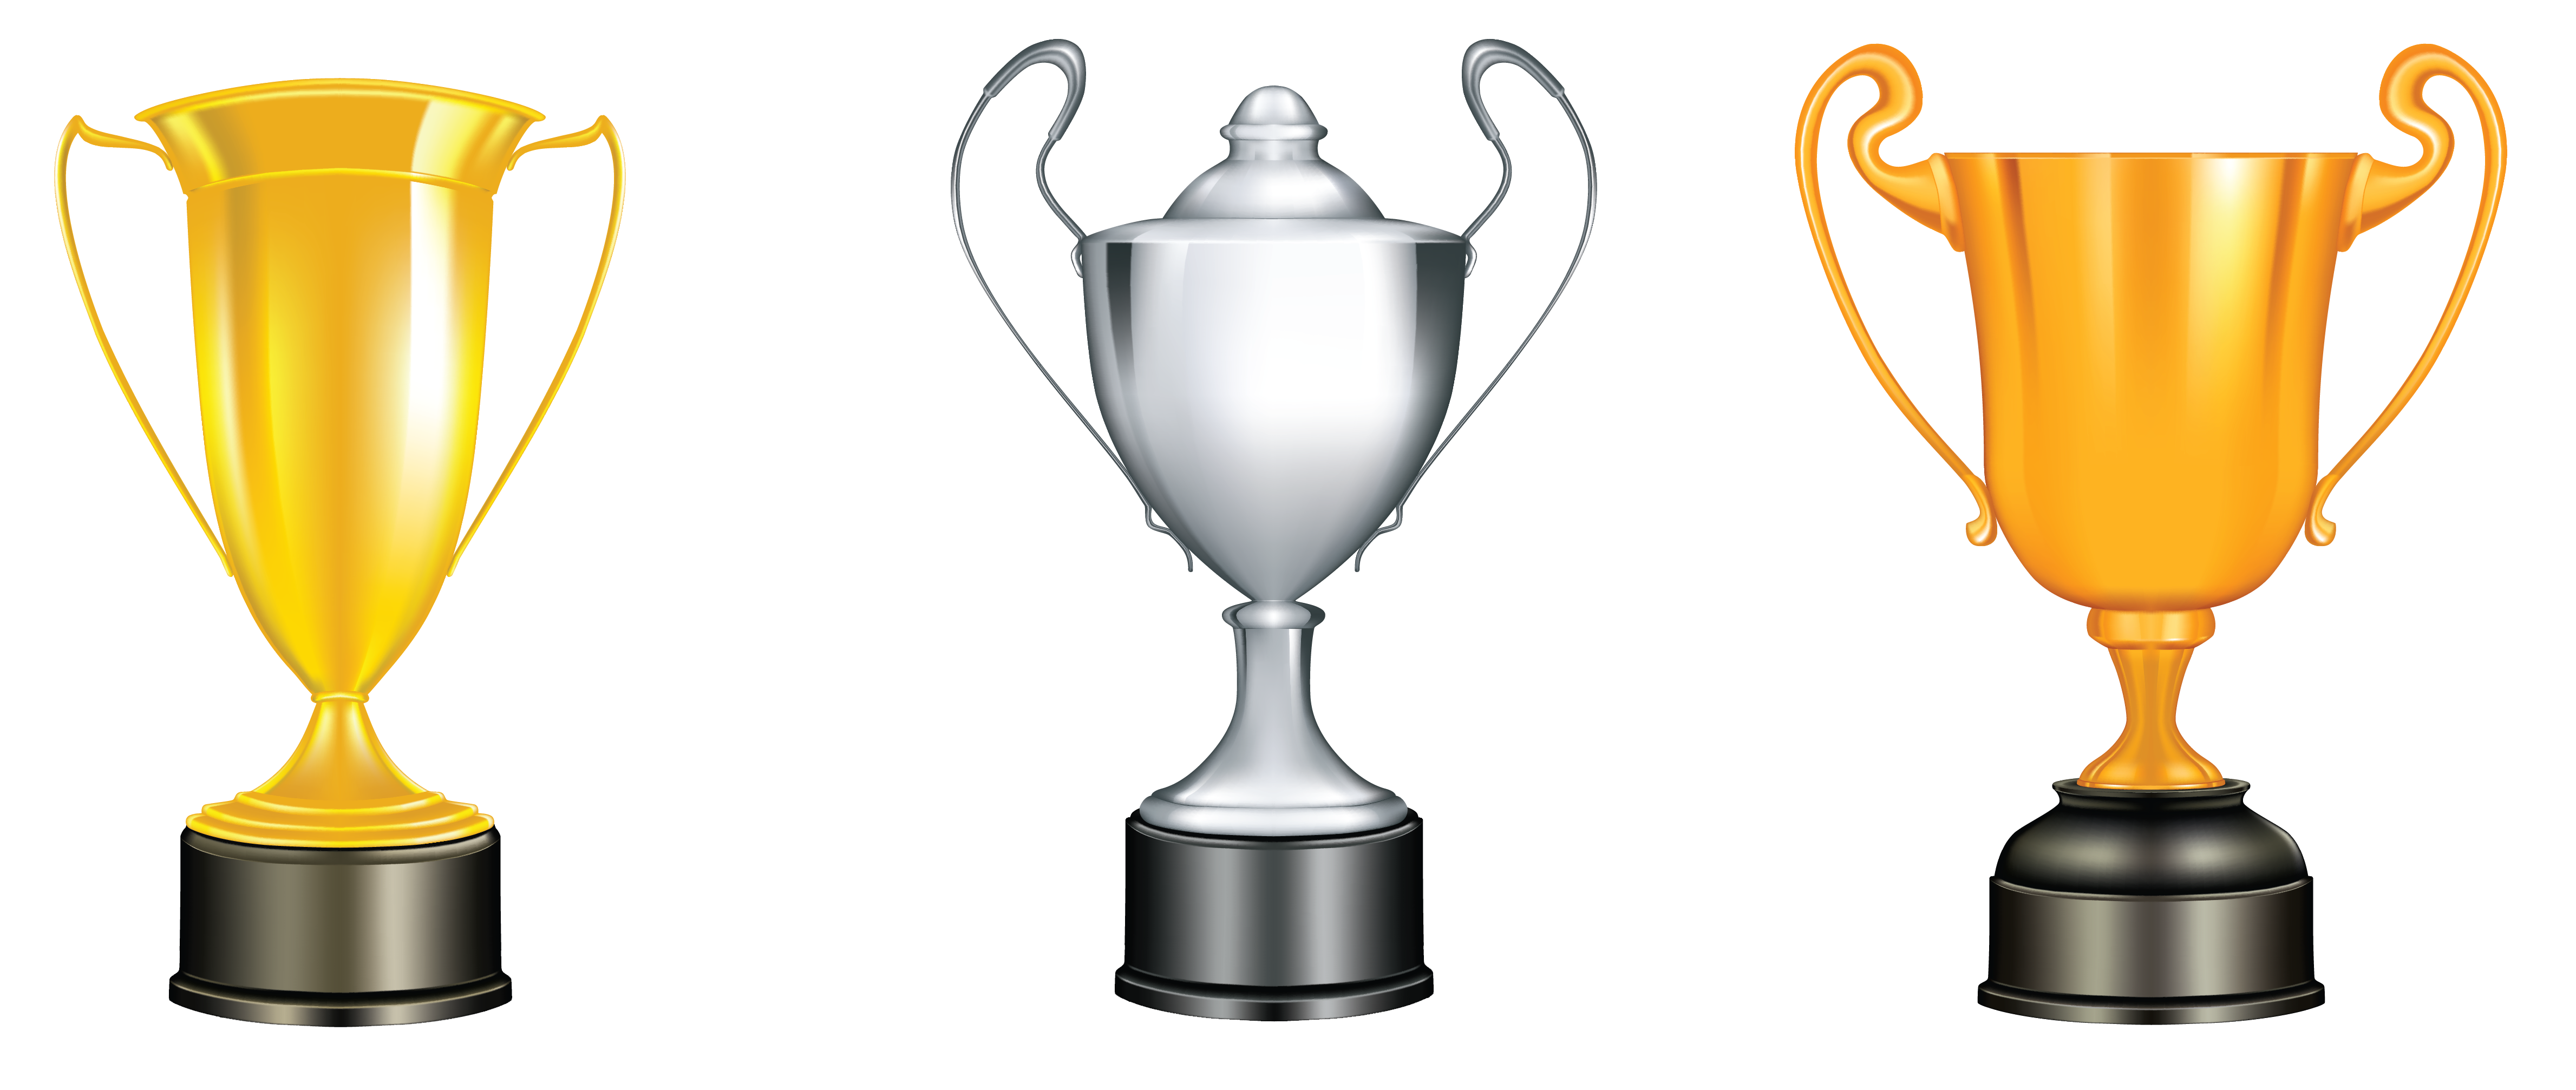 Award Cup PNG Image